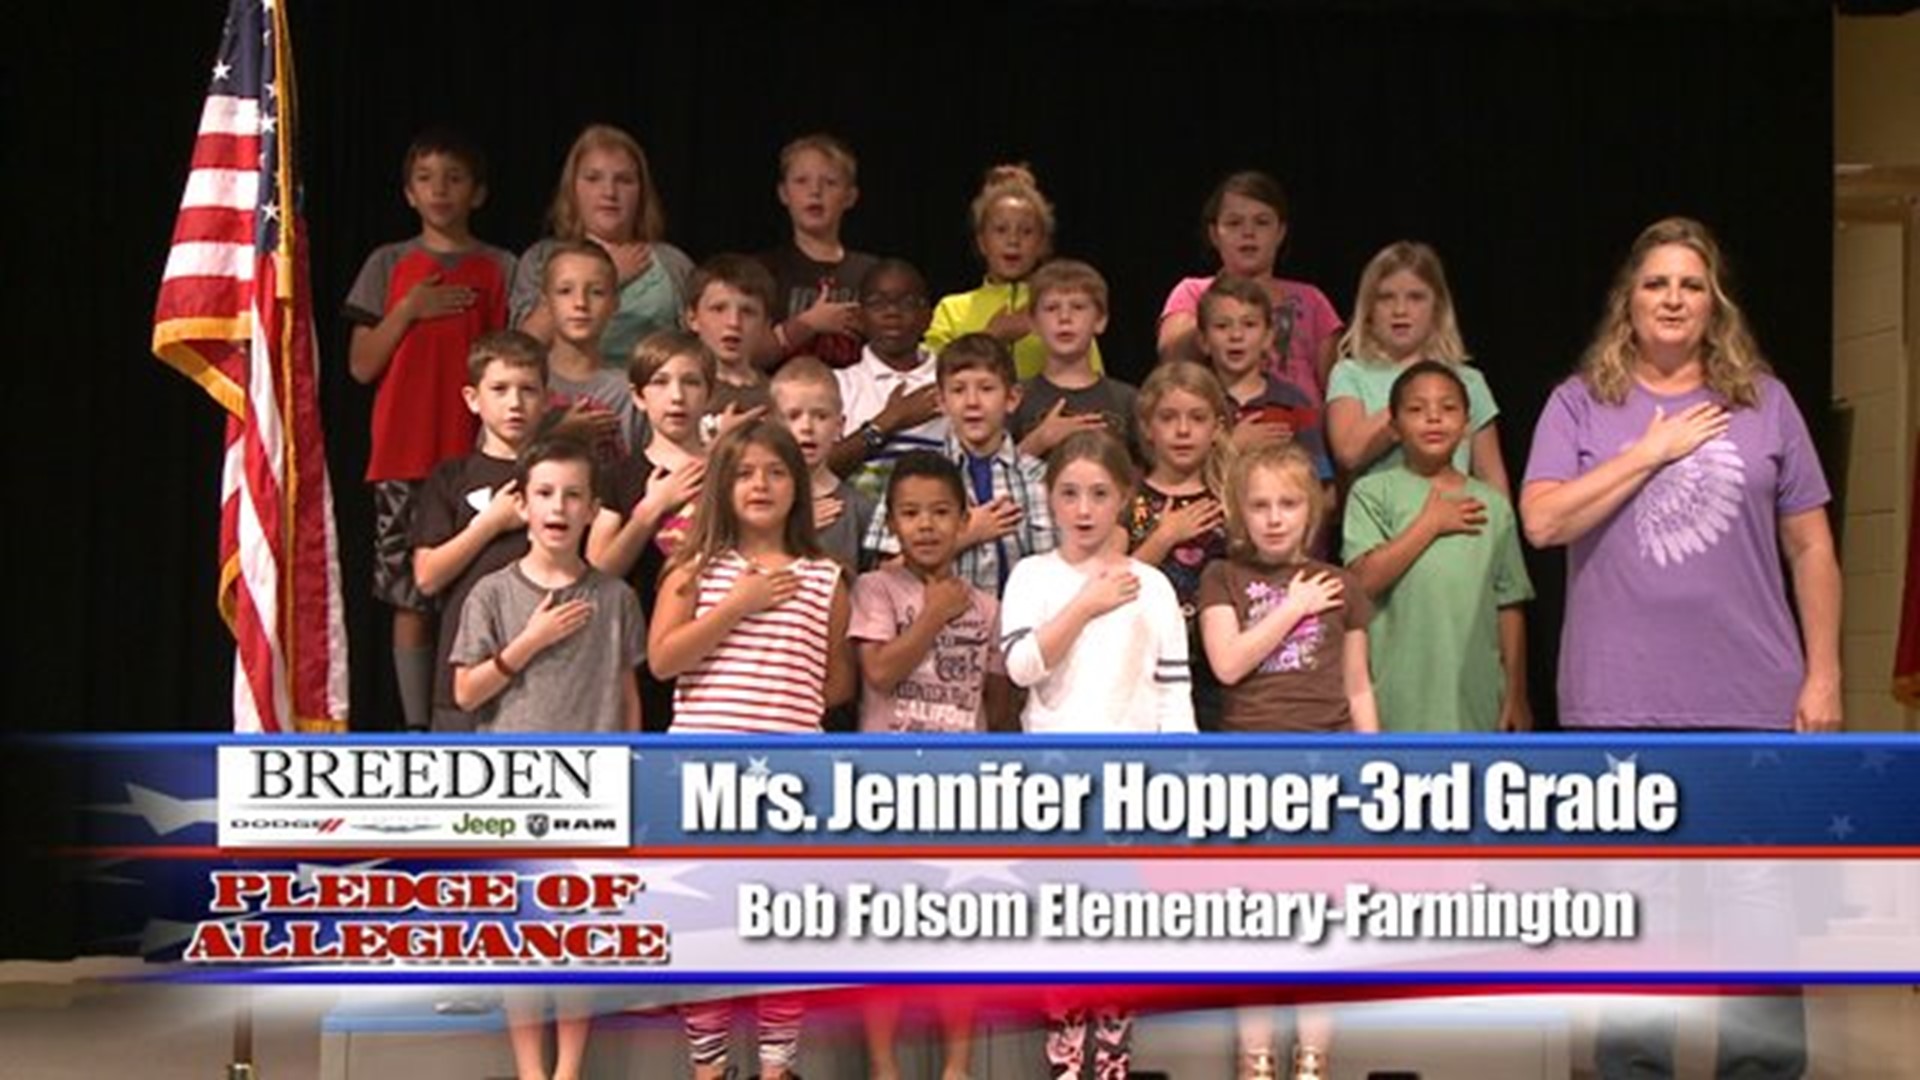 Bob Folsom Elementary, Farmington - Mrs. Jennifer Hopper - 3rd Grade